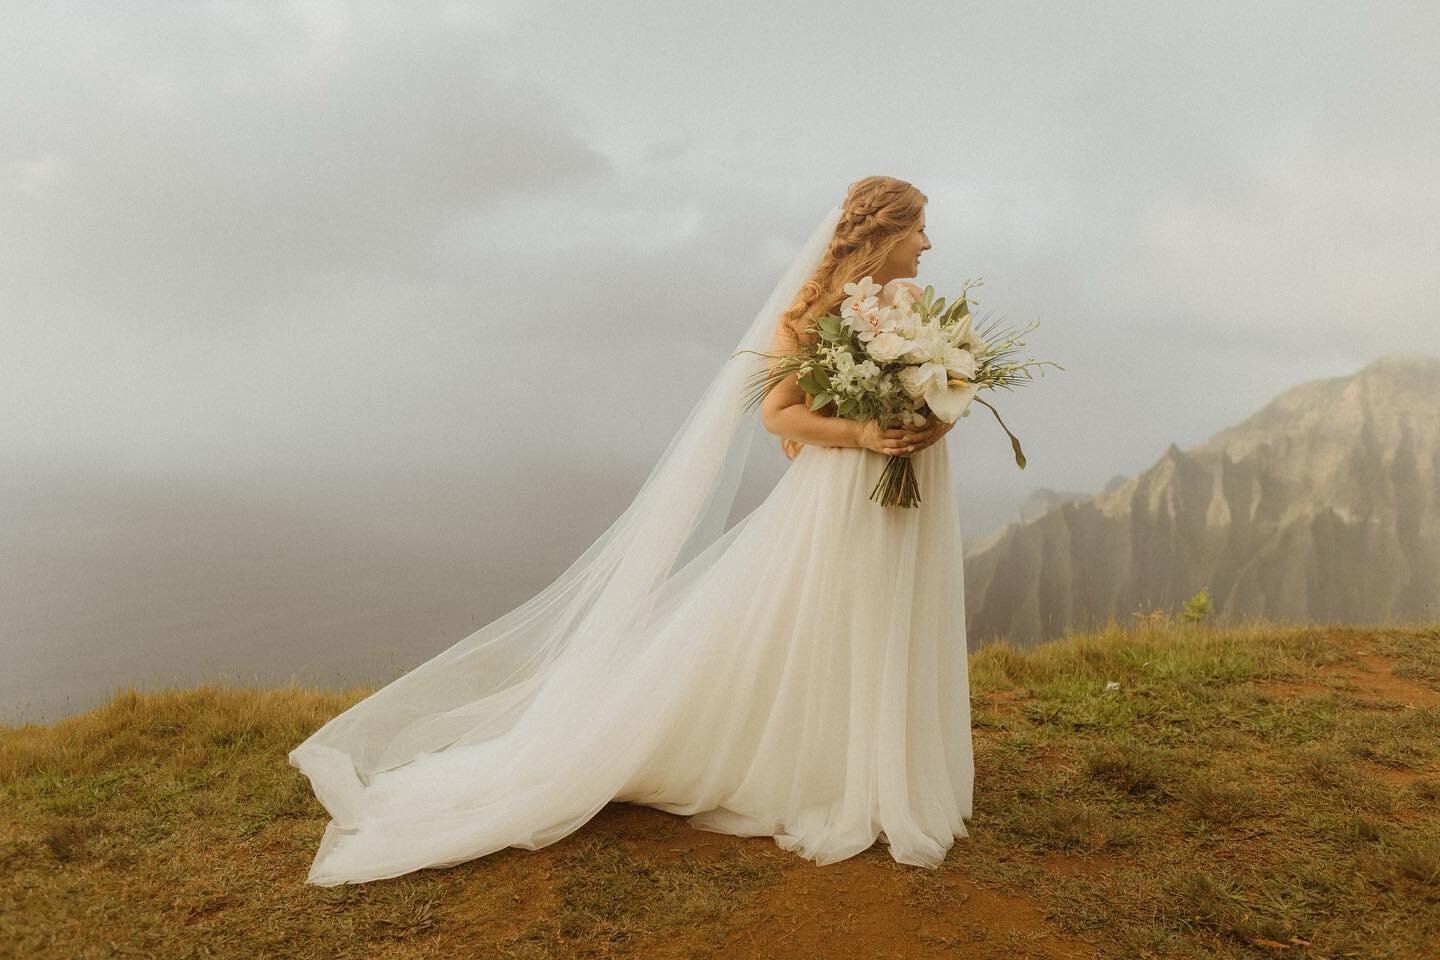 Mystical Love 

#bridalhairandmakeup#kokee#wedding#kauaidestinationwedding#islandwedding#moutainstothesea